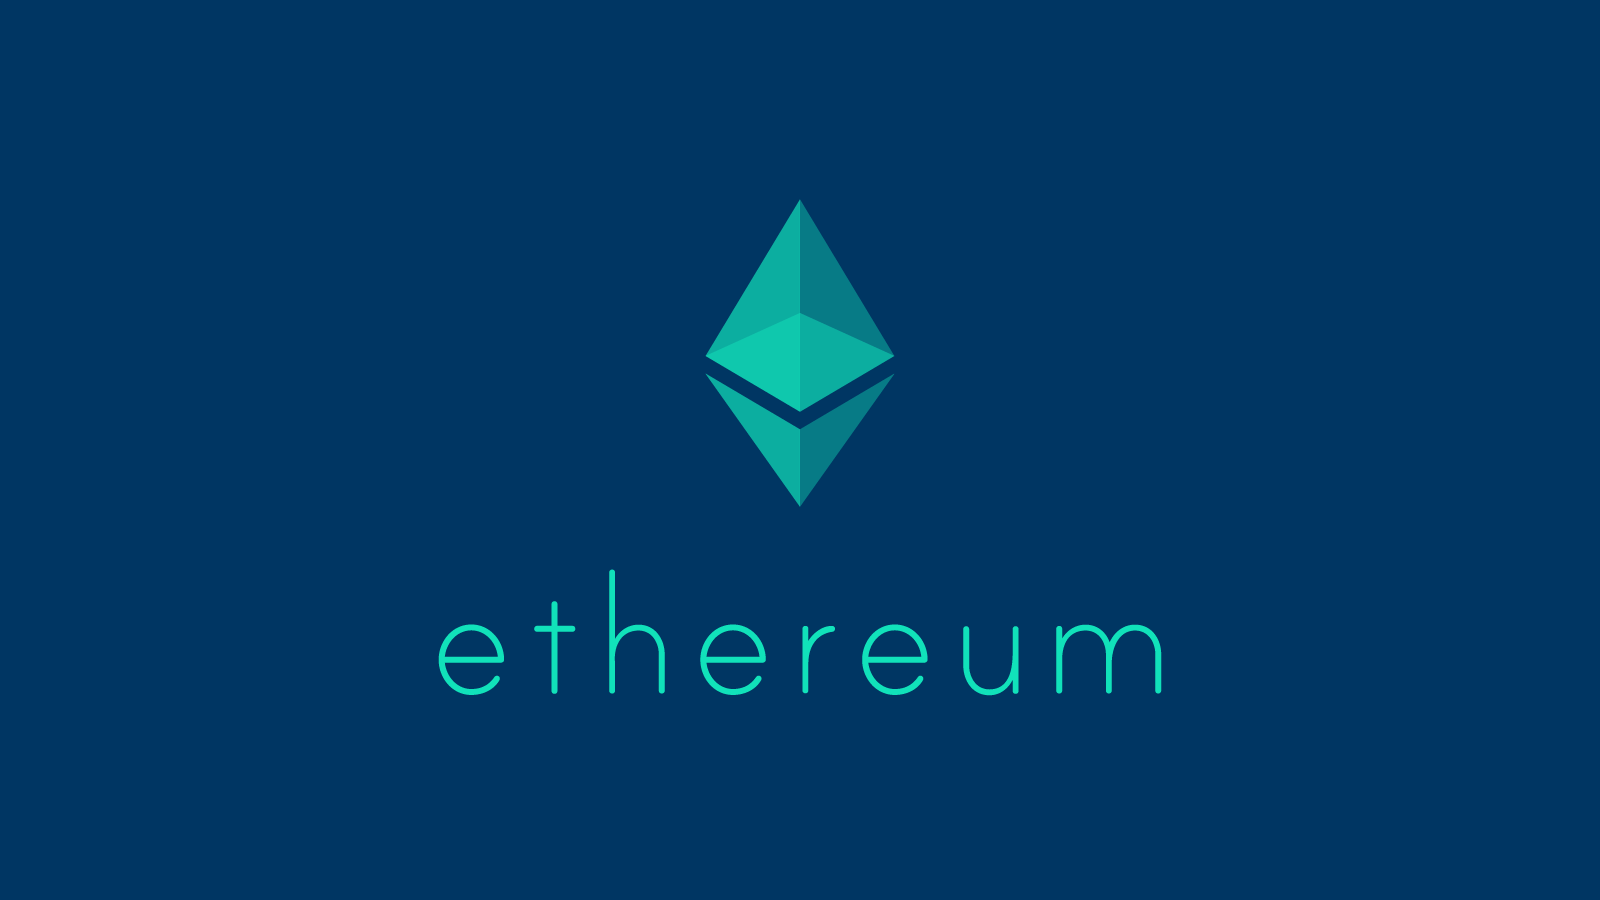 Ethereum - Investors King